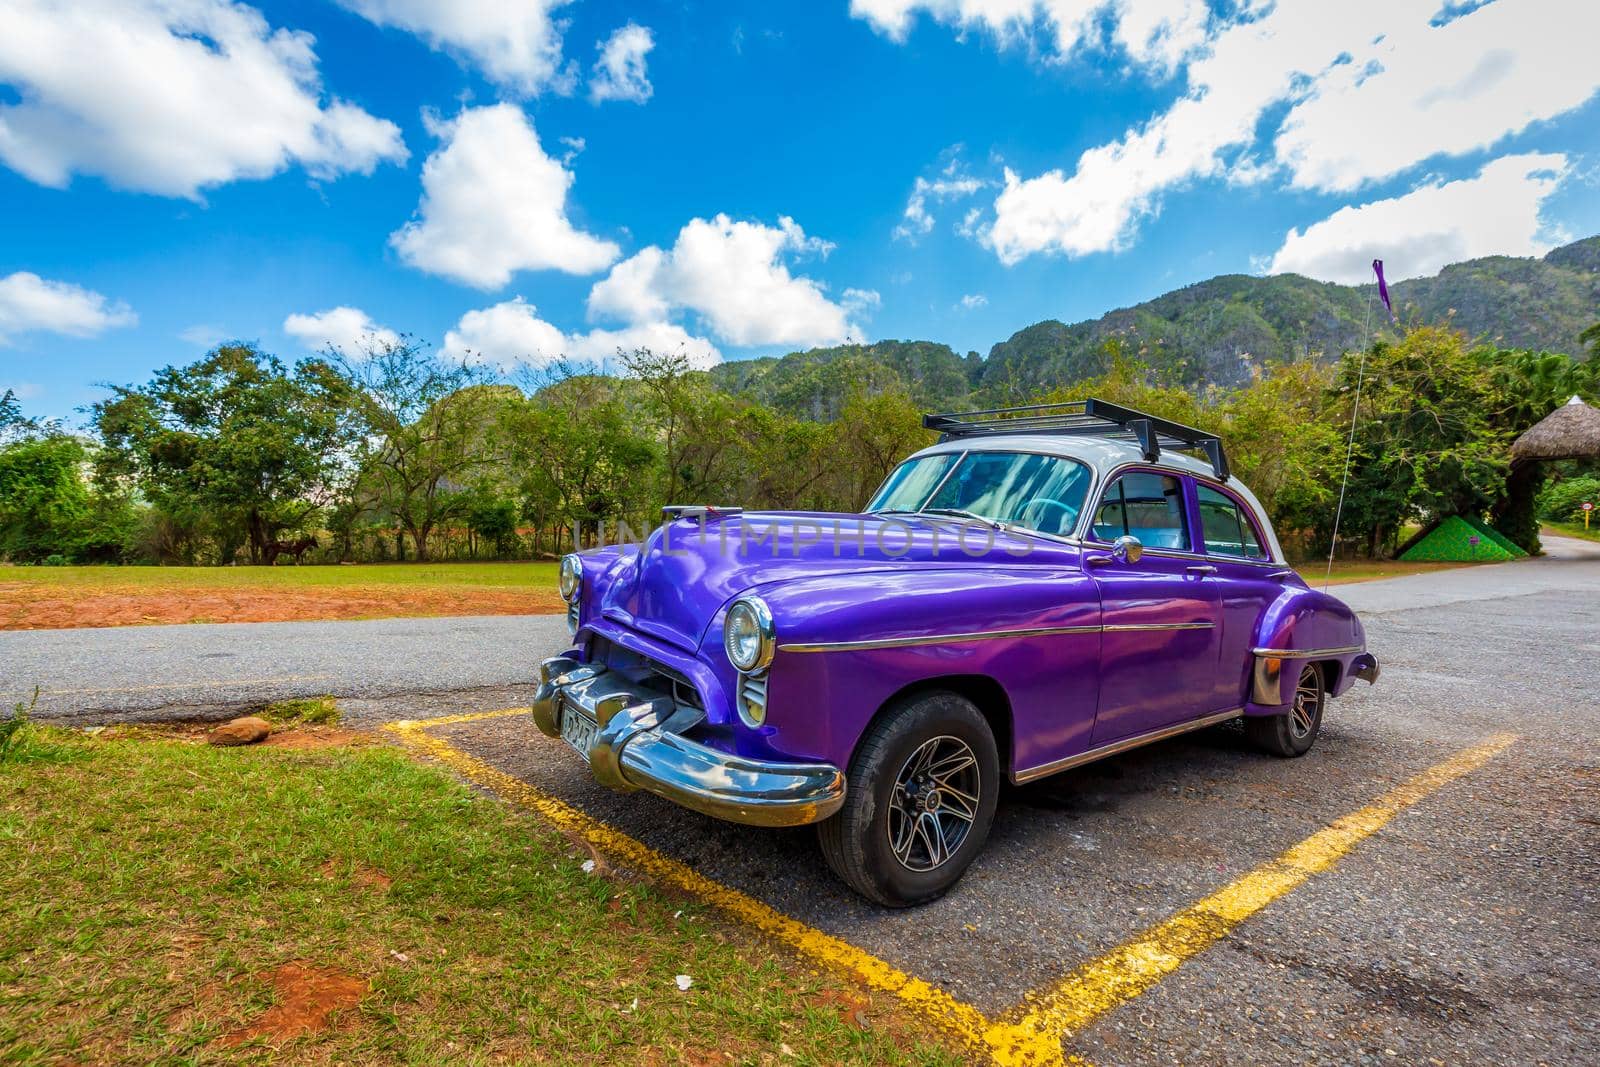 Classic American car in Cuba by gepeng